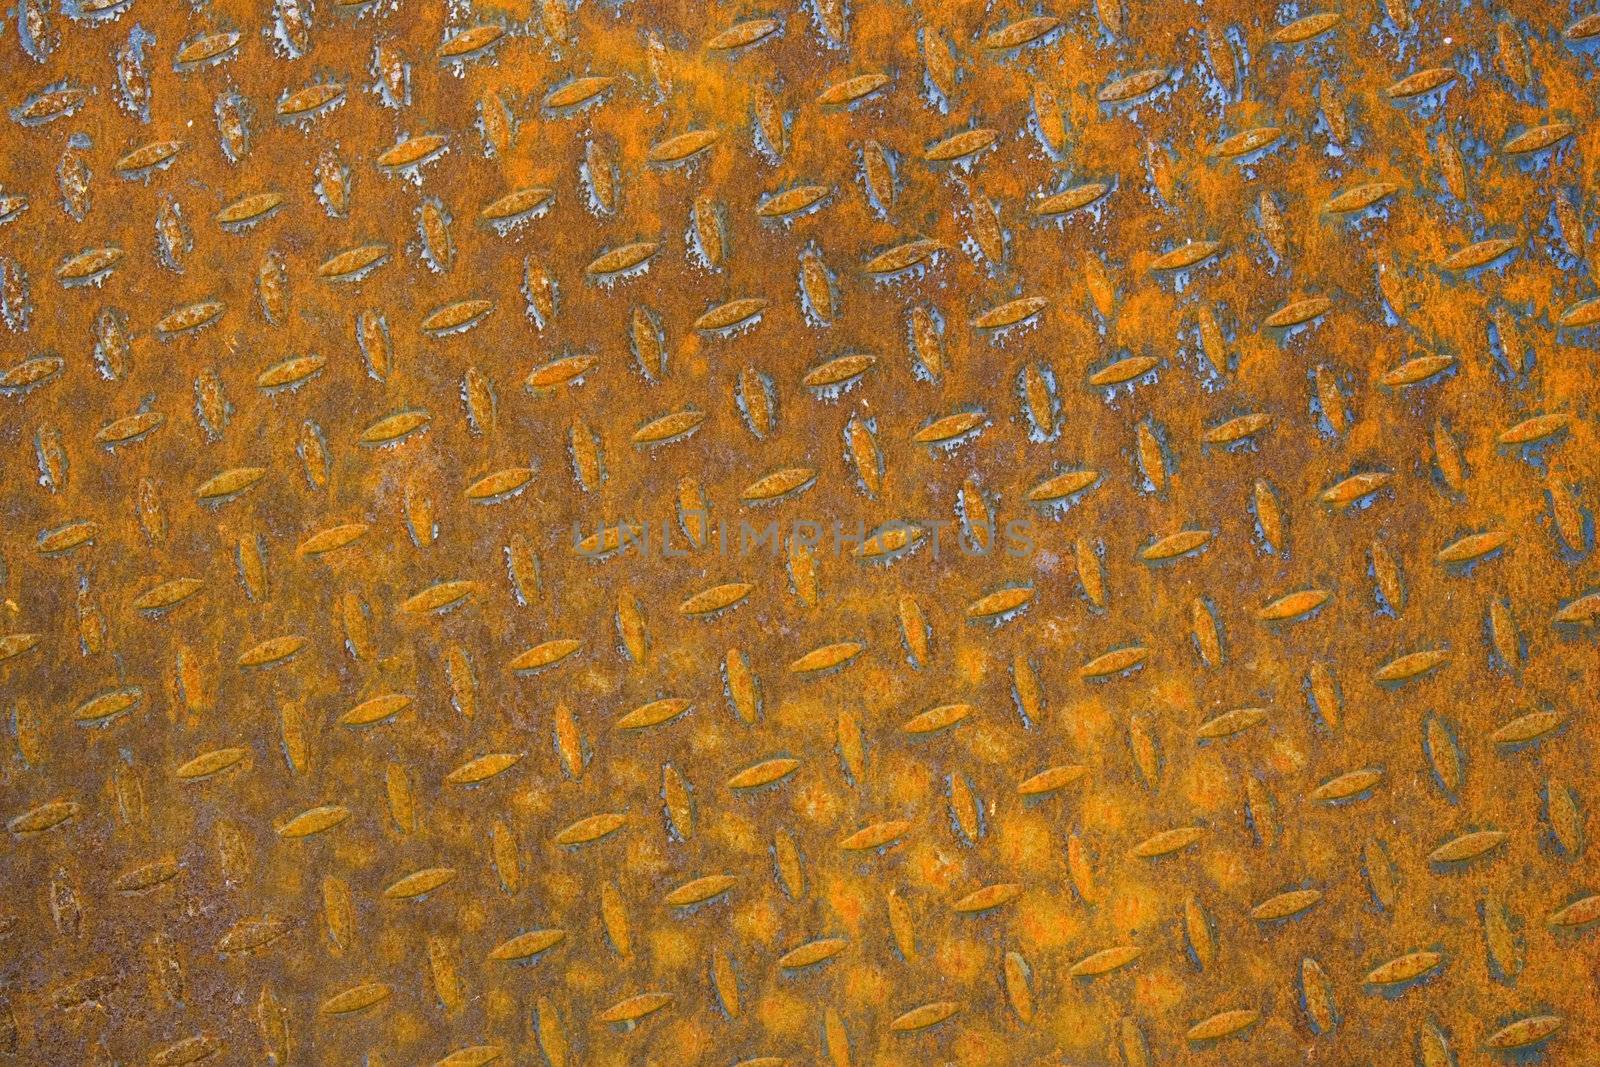 Texture of Rusty Sheet Metal